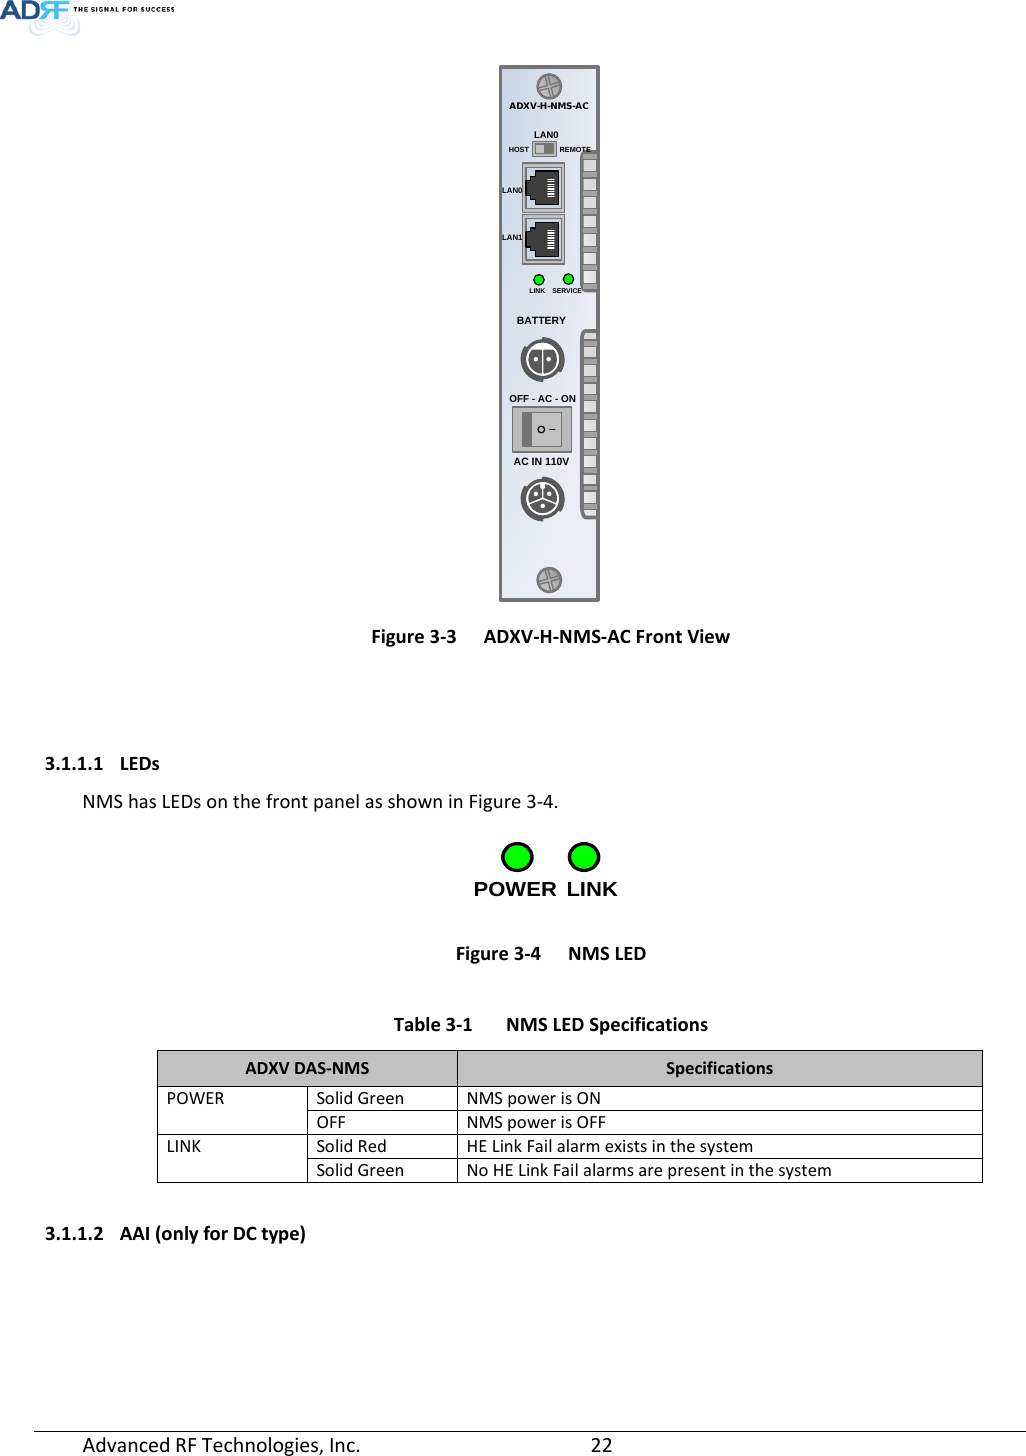 Page 22 of ADRF KOREA ADXV-R-336 DAS (Distributed Antenna System) User Manual ADXV DAS